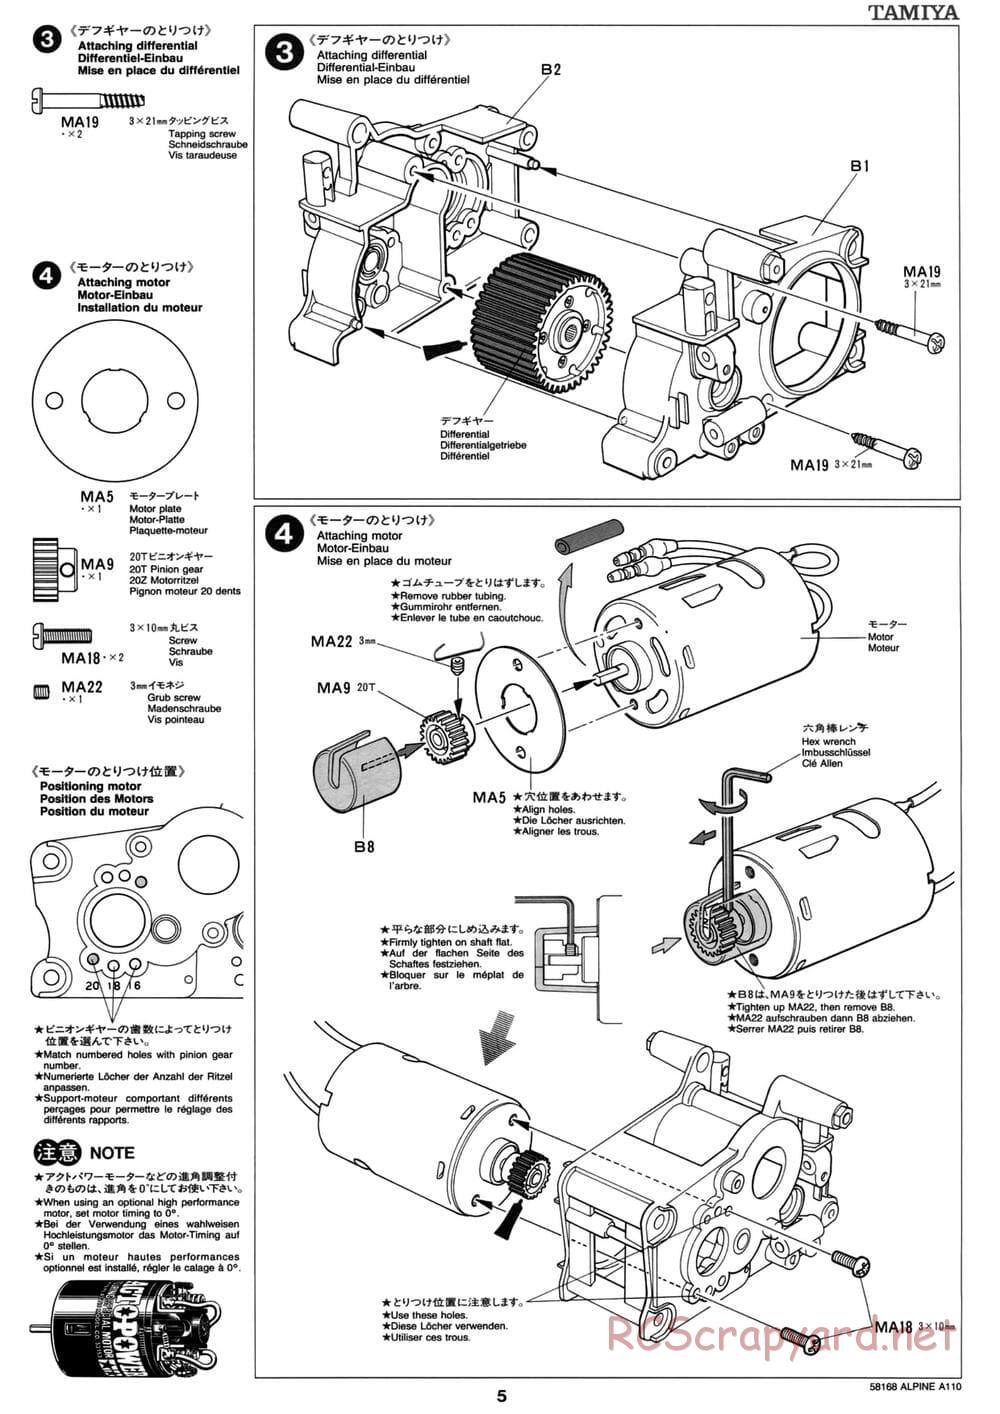 Tamiya - Alpine A110 - M02 Chassis - Manual - Page 5